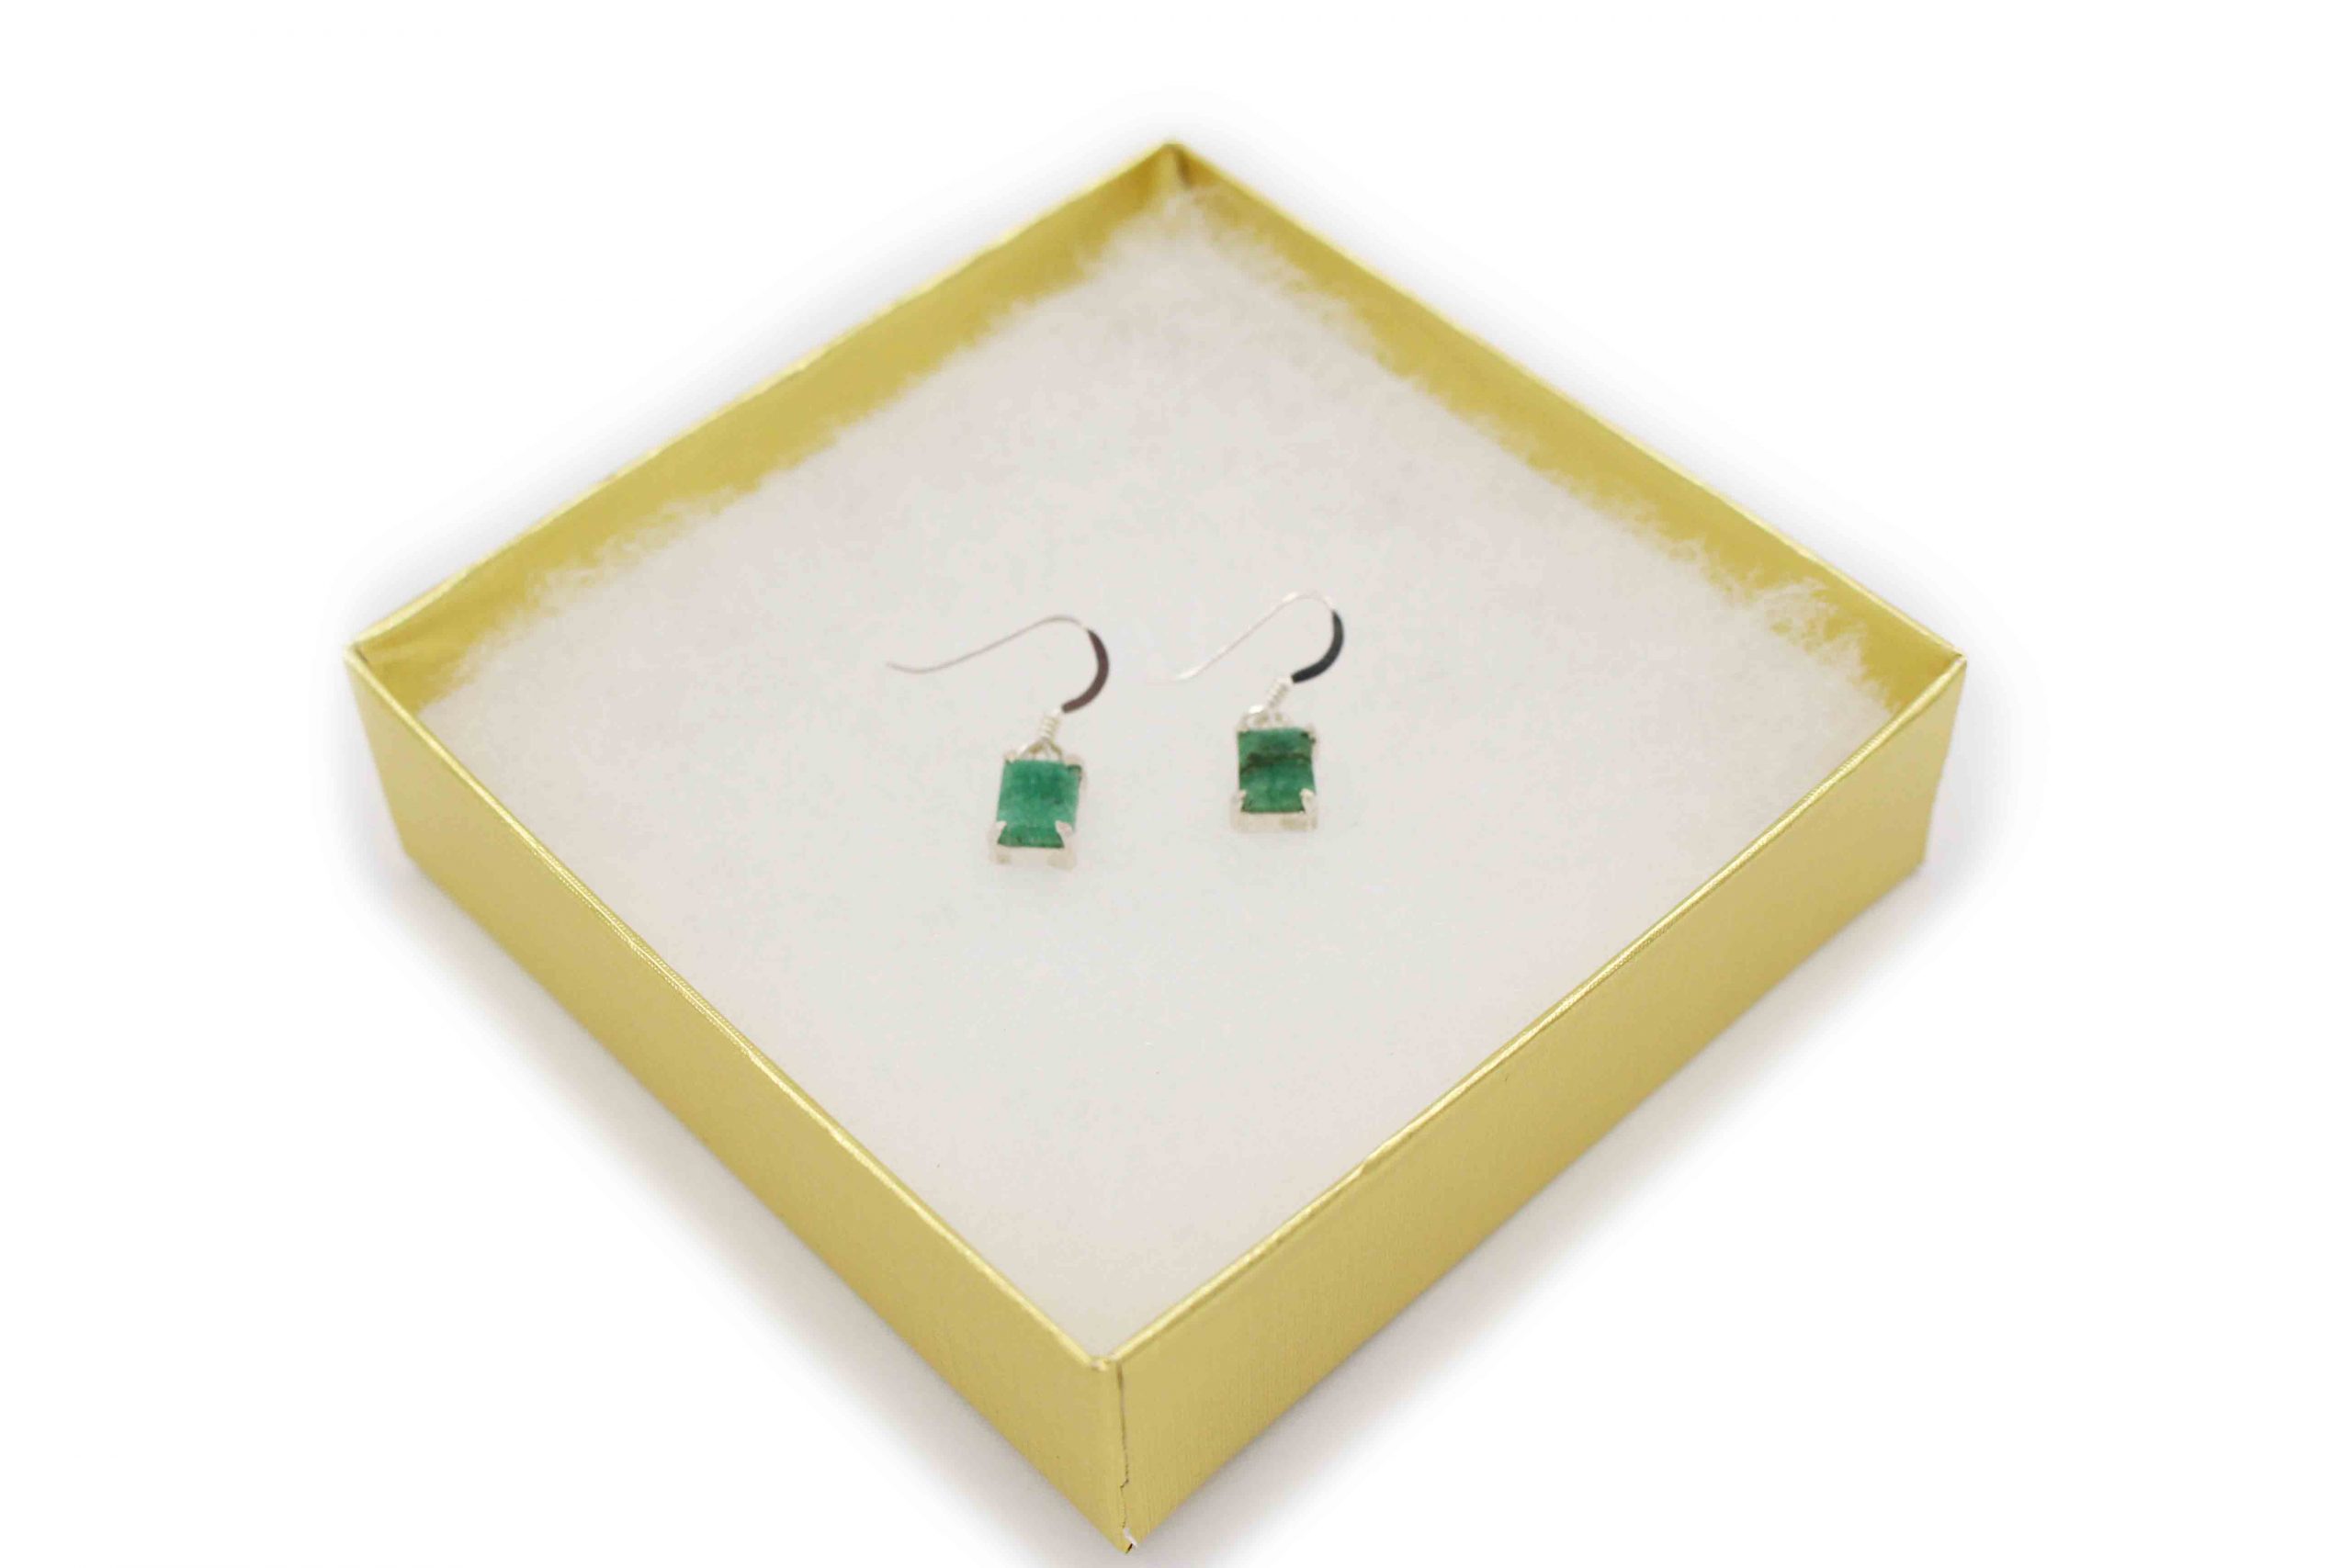 Emerald Sterling earrings Sterling Silver - Crystal Dreams